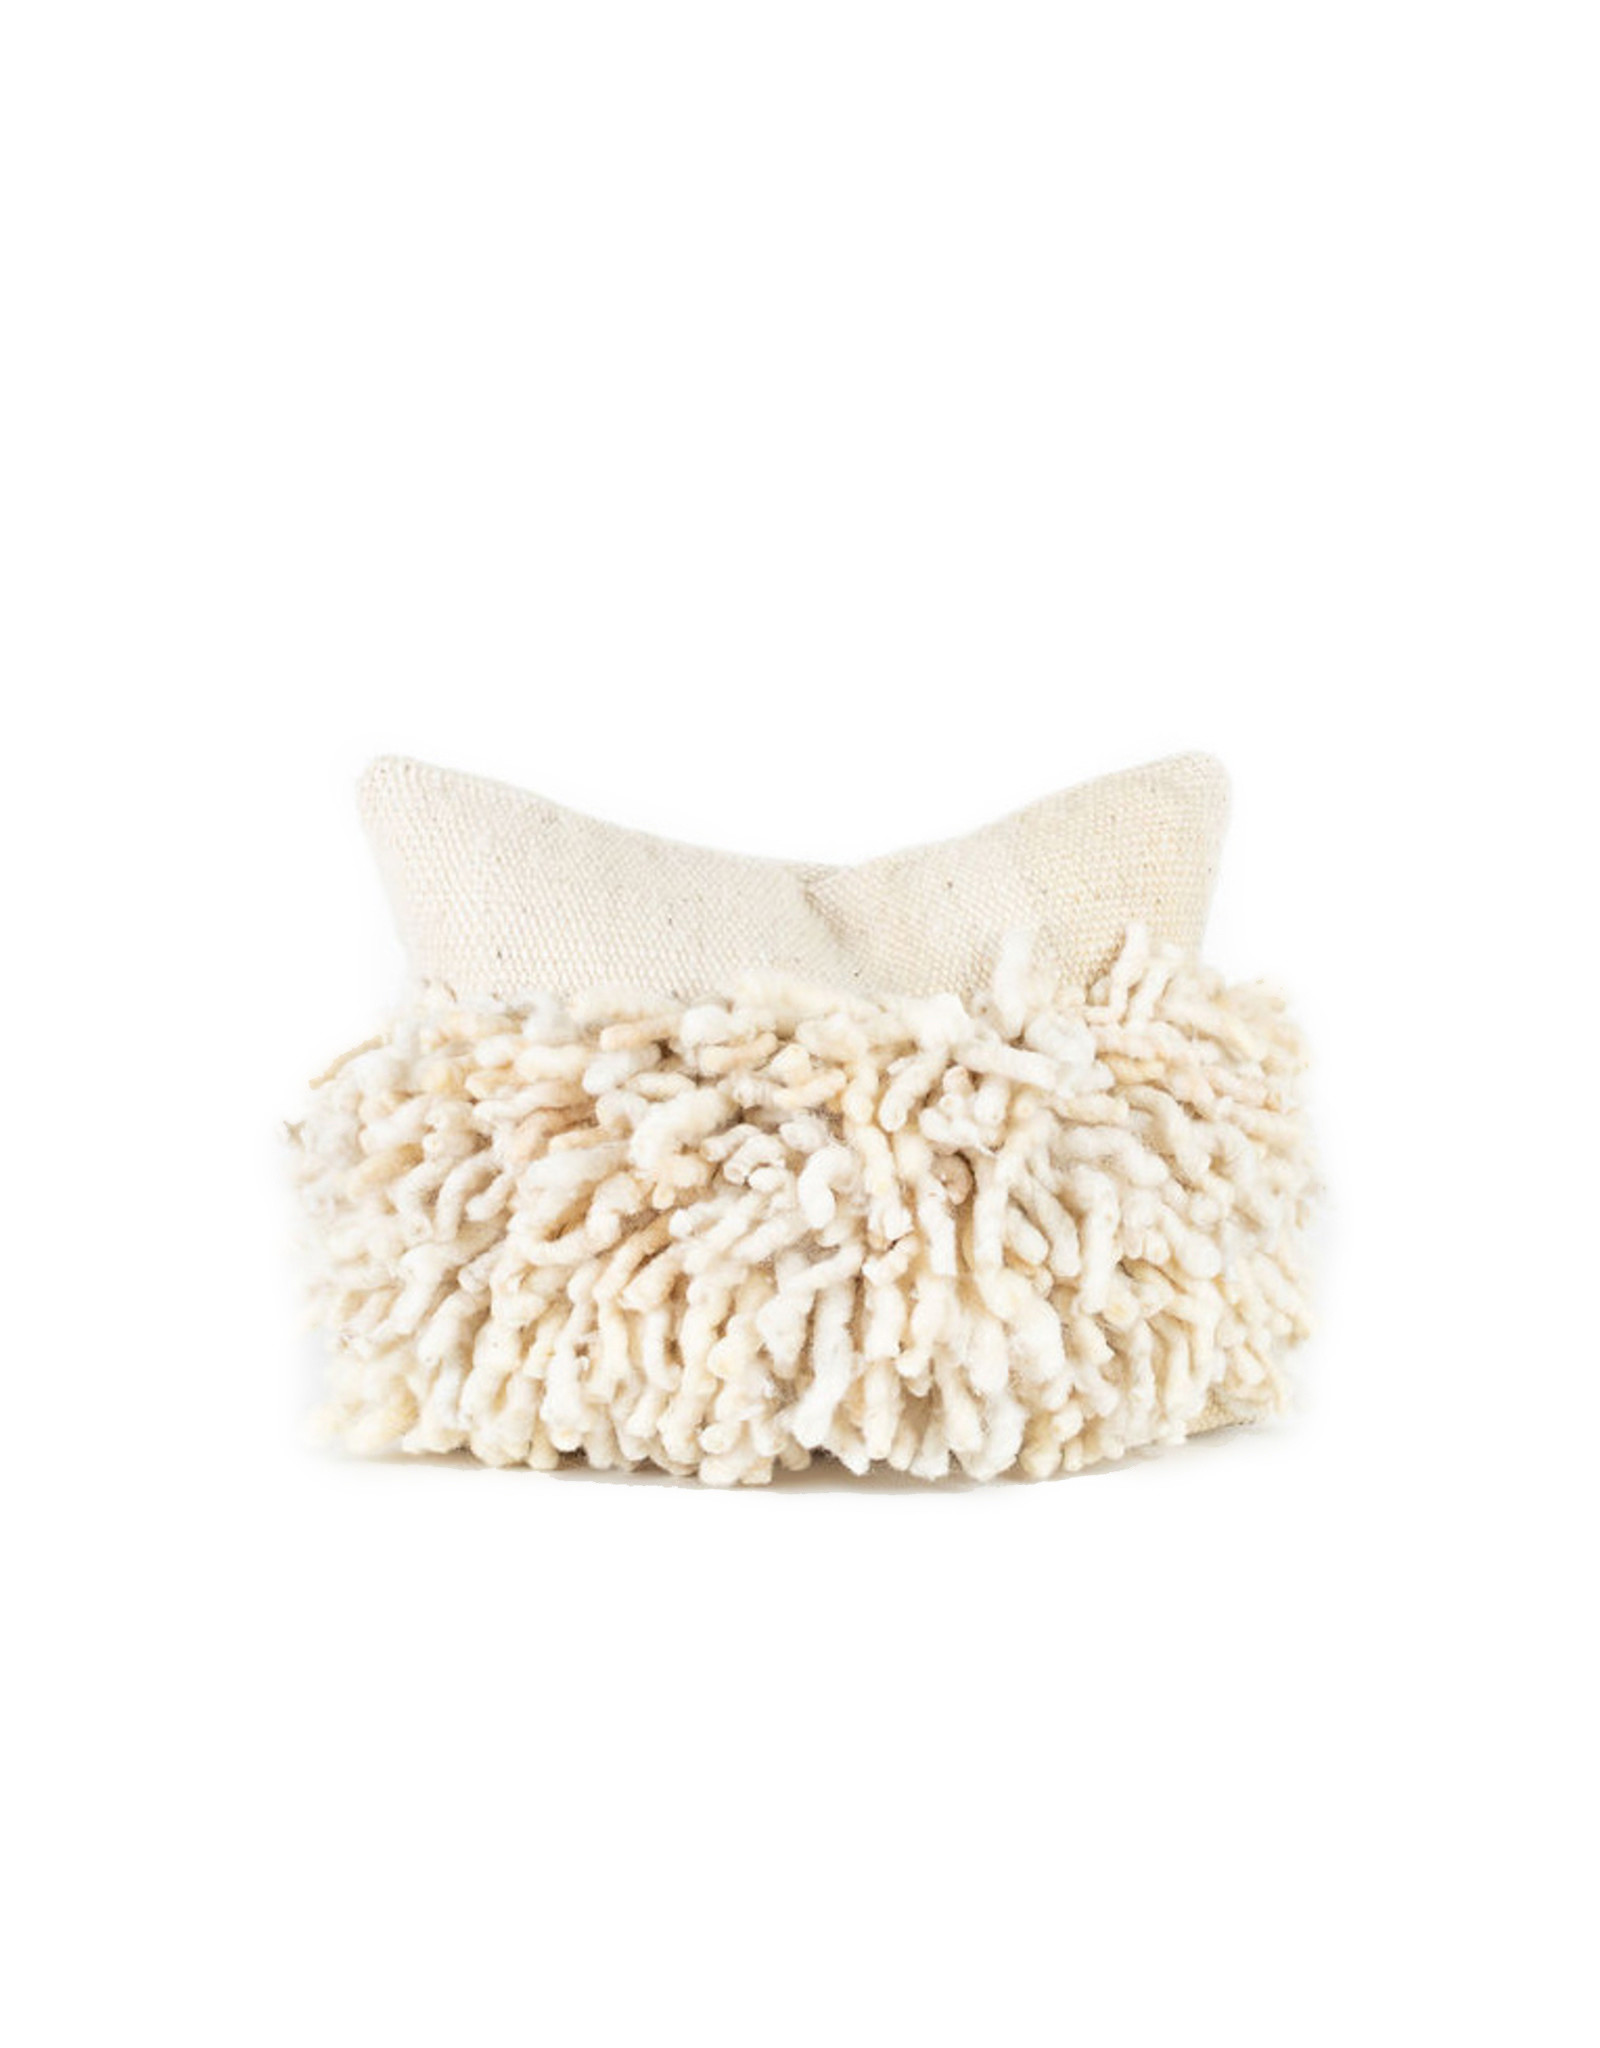 White Fringe Pillow, Chile 20x20